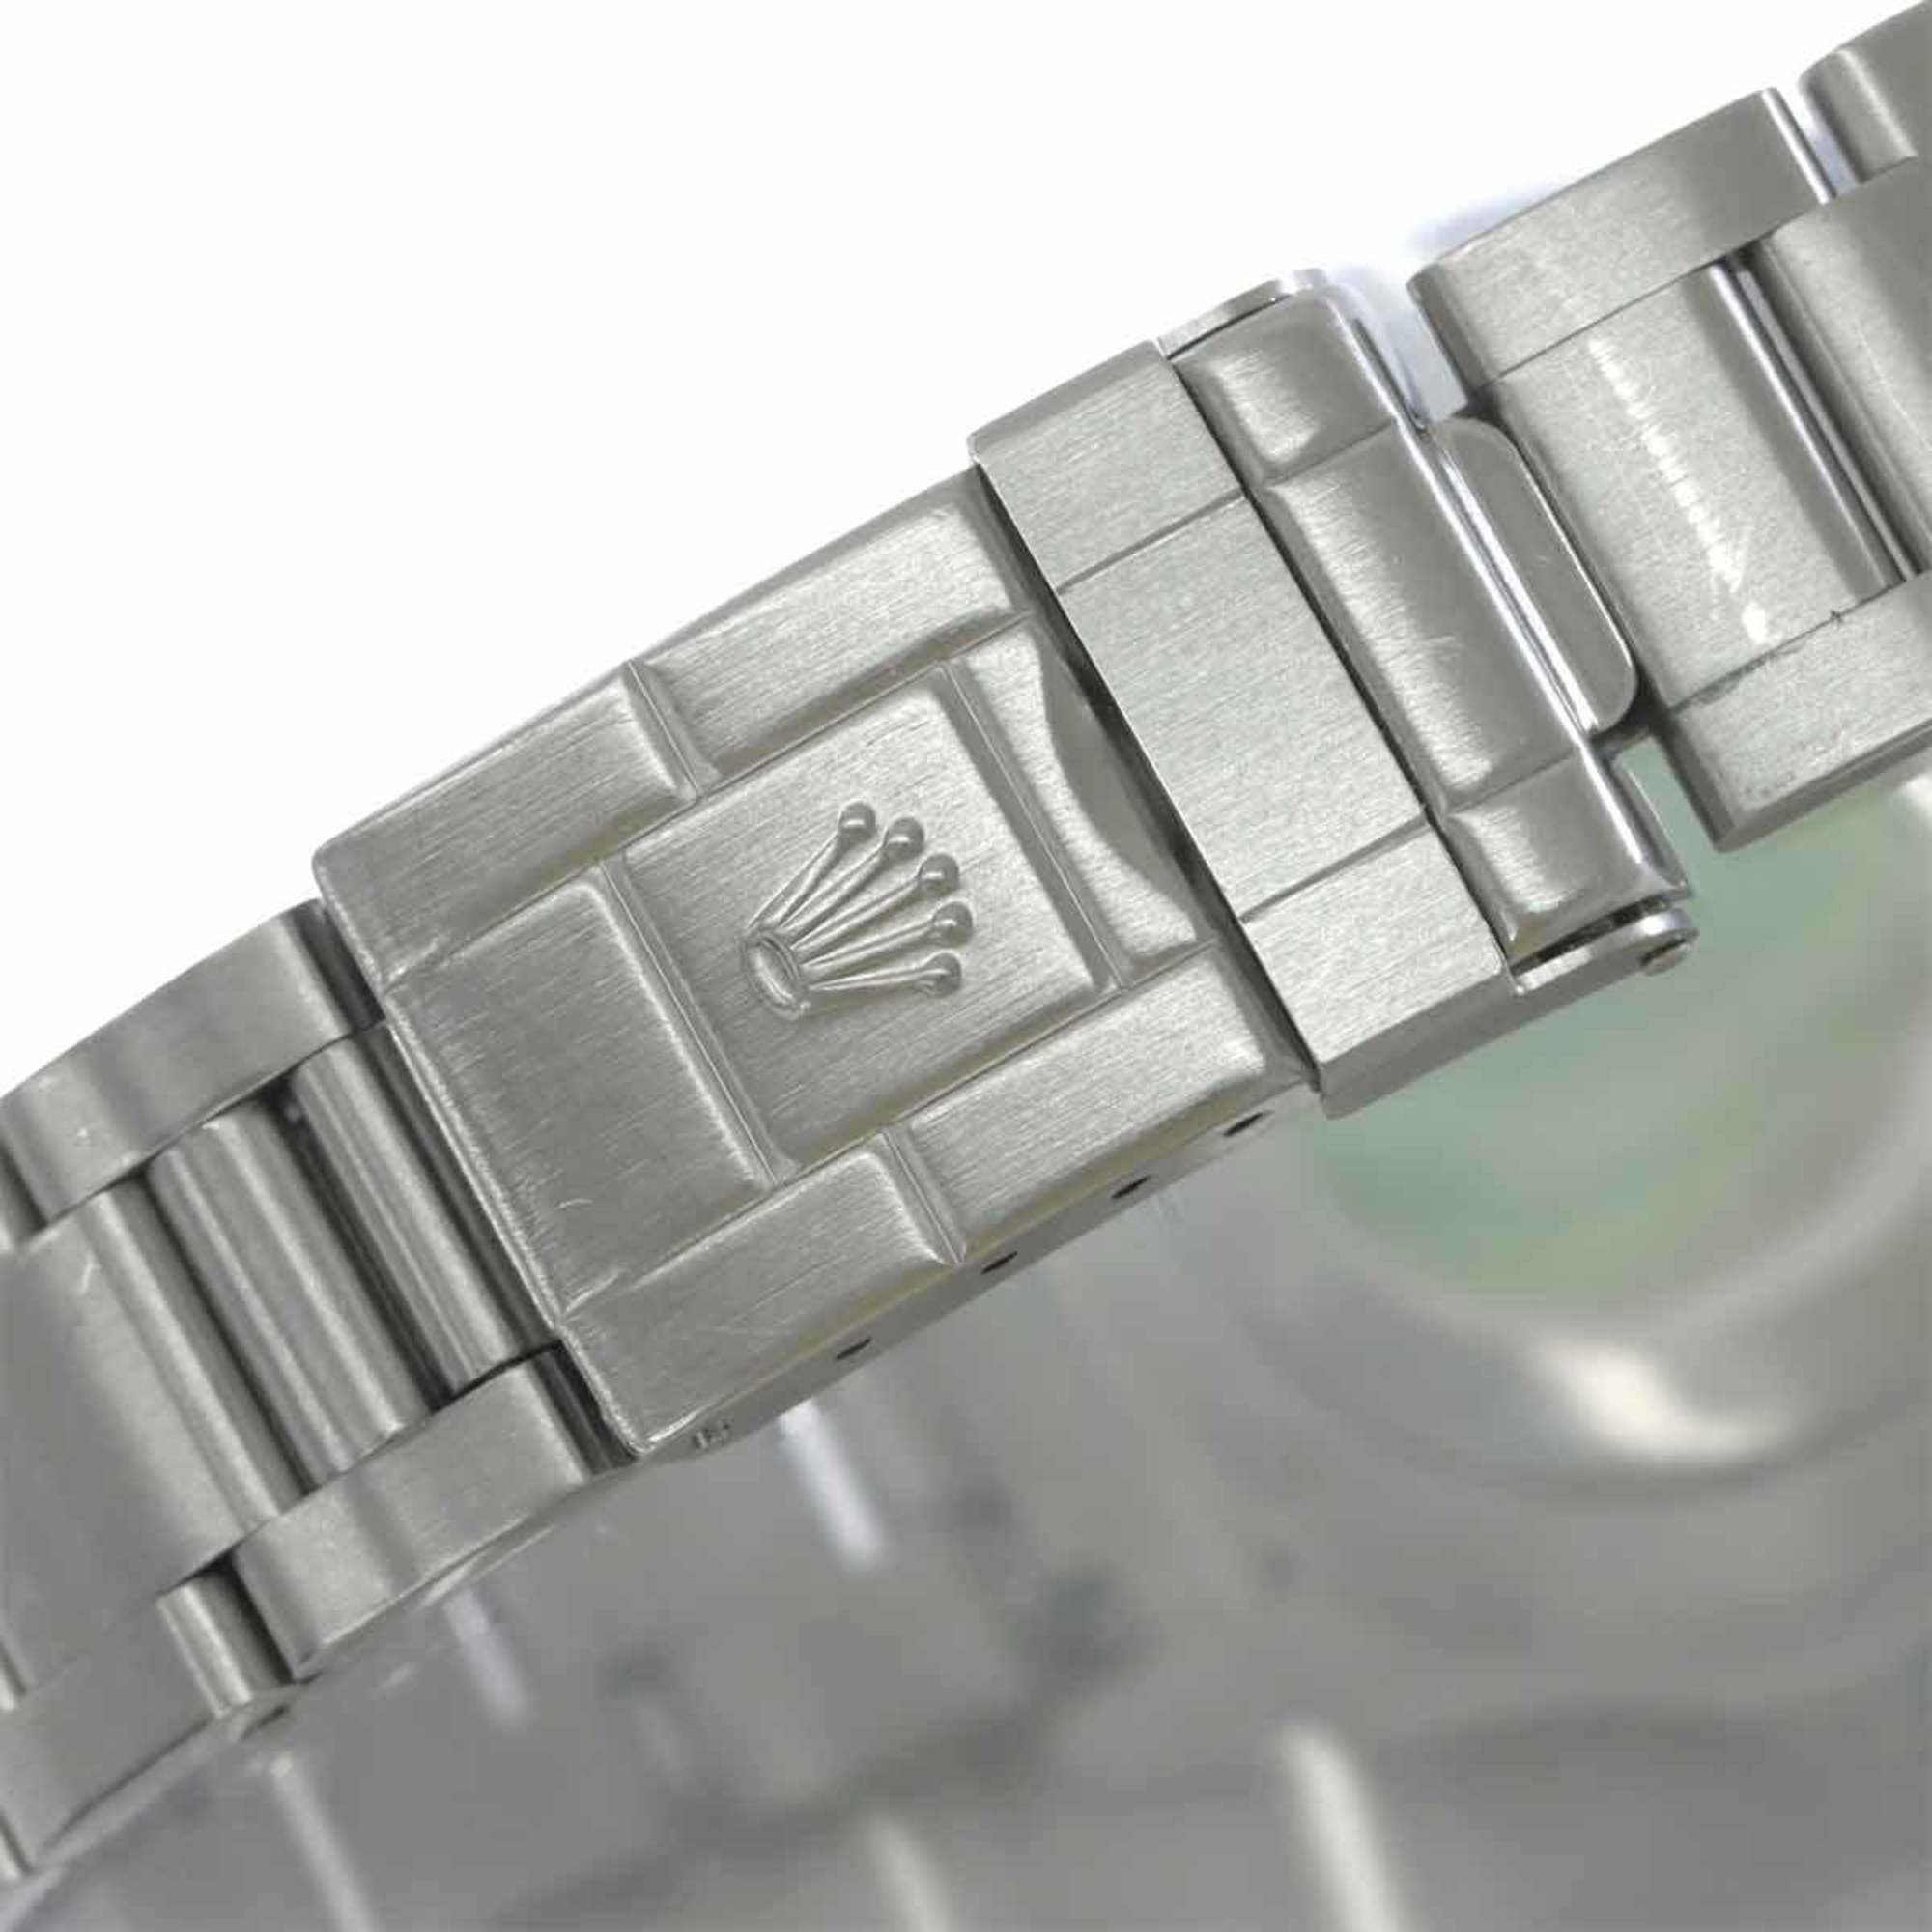 Rolex ROLEX GMT Master II 16710 Z-series Stick Dial Men's Watch Date Black Automatic Self-Winding